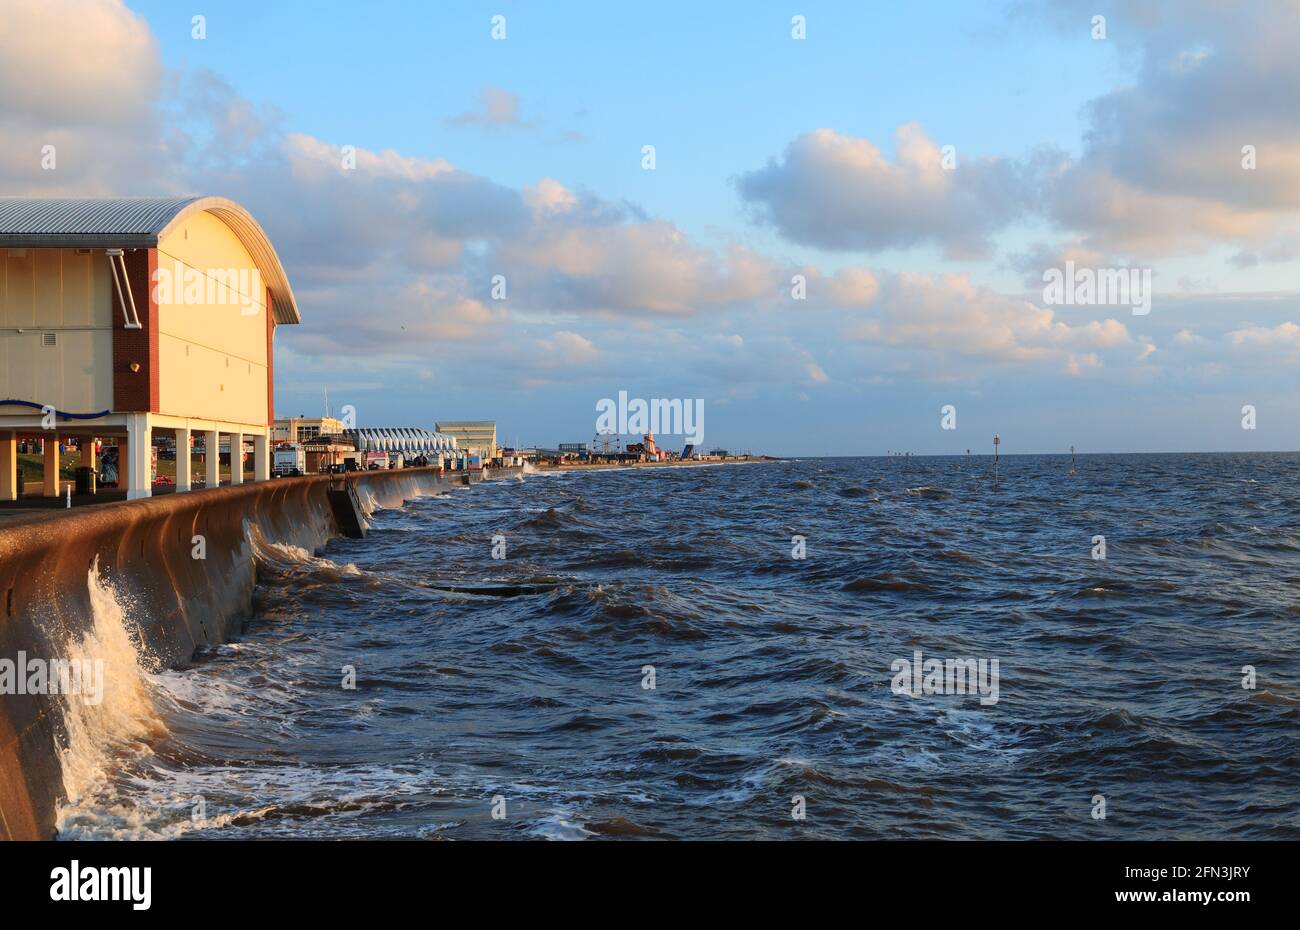 Hunstanton, sea front, amusements, funfair, high tide, seaside resort, sea wall, The Wash, Norfolk, England Stock Photo